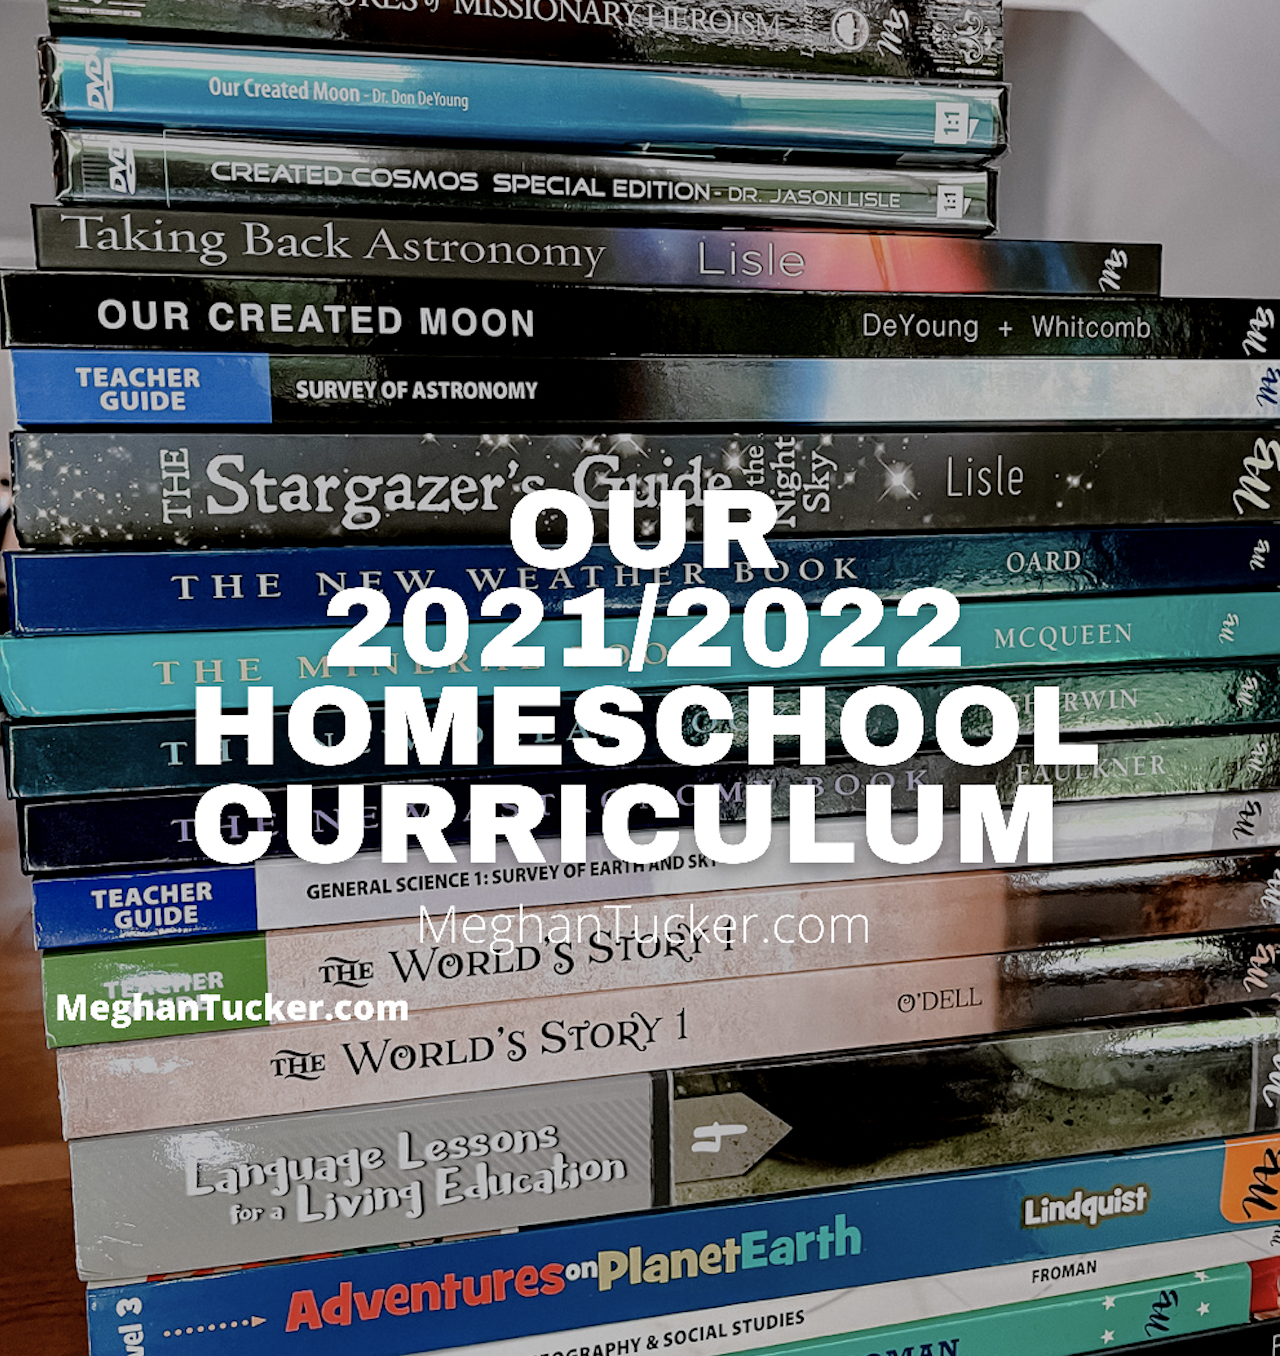 Our 2021/2022 Homeschool Curriculum